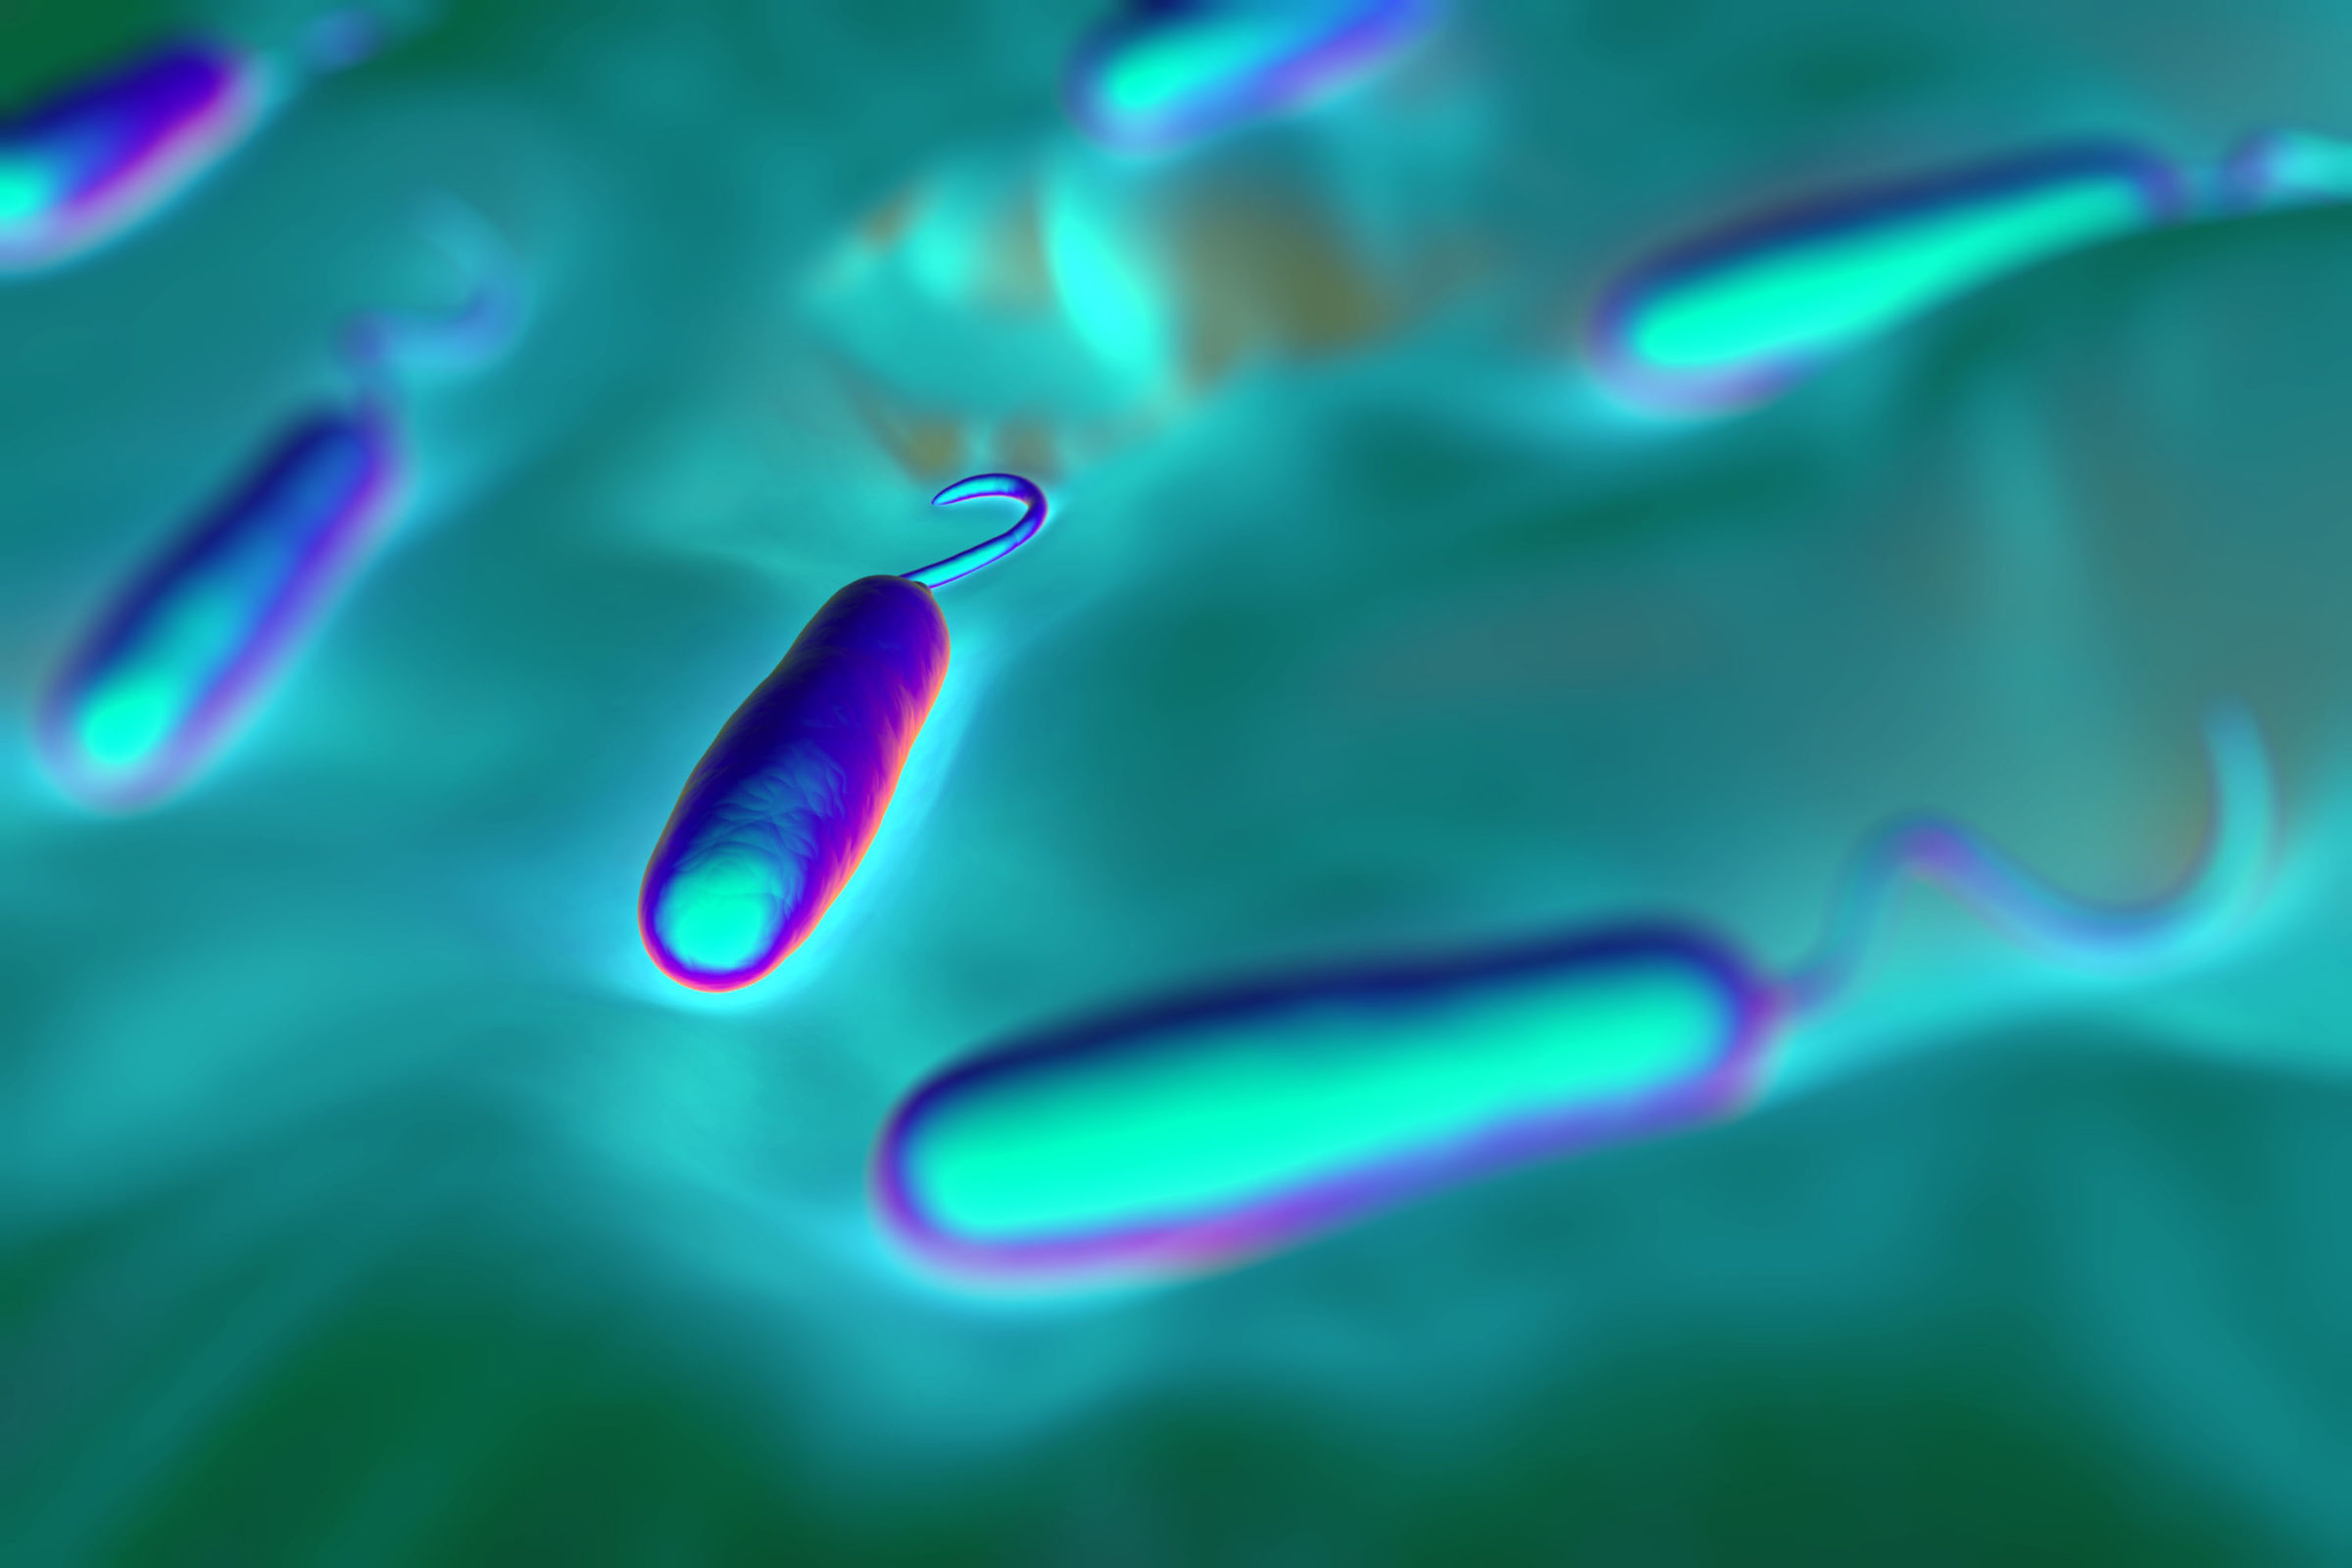 Gram-negative rod-shaped bacteria have a single polar flagellum